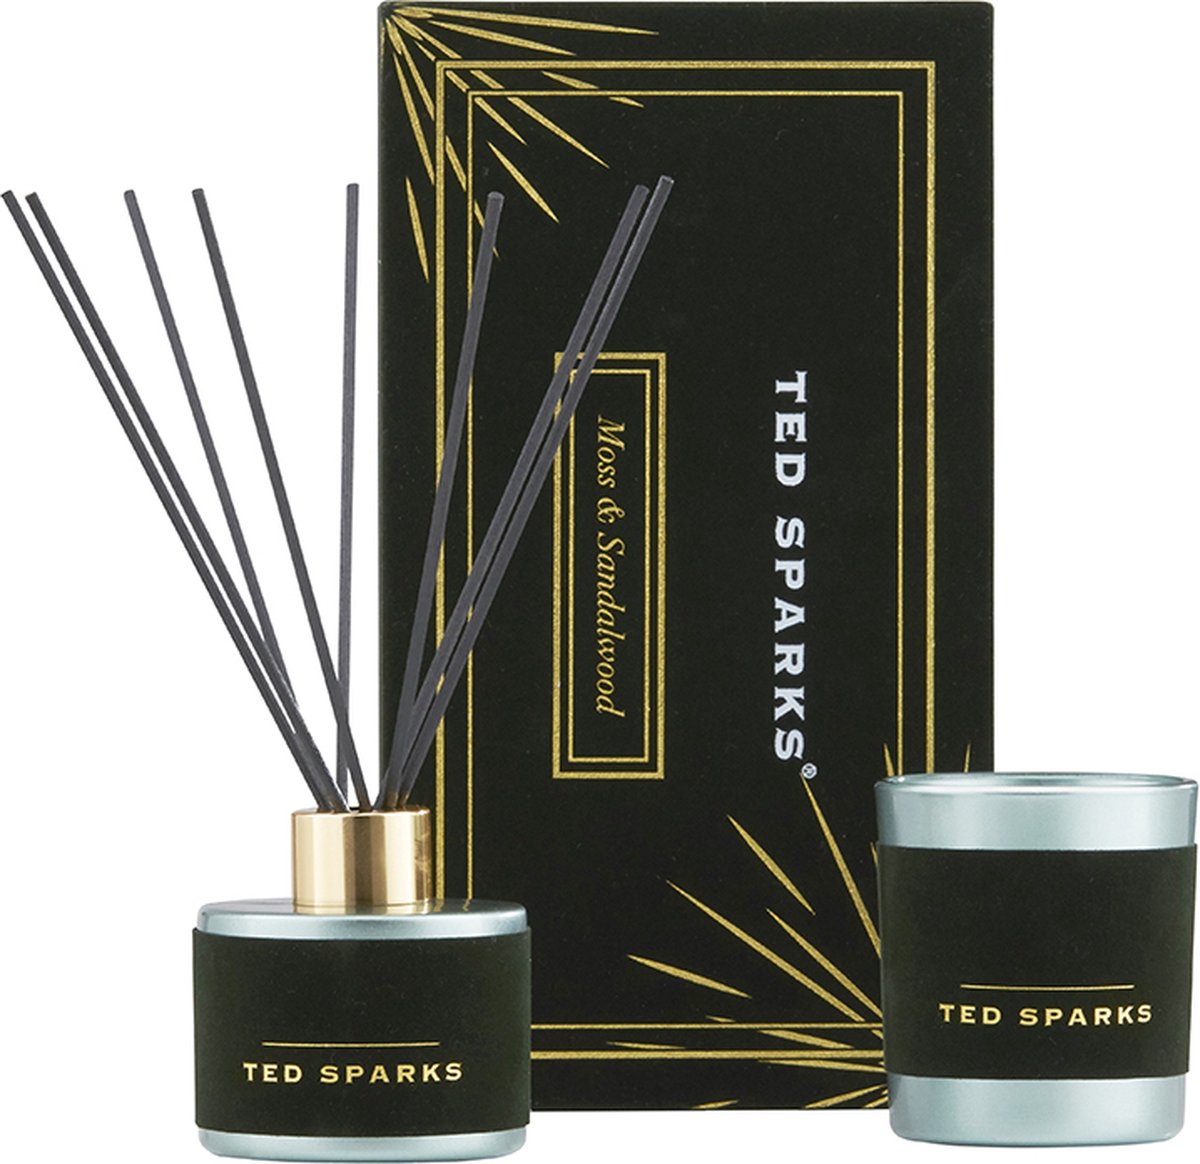 Ted Sparks - Velvet Collection Gift Box - Geurkaars & Geurstokjes Diffuser - Moss & Sandalwood